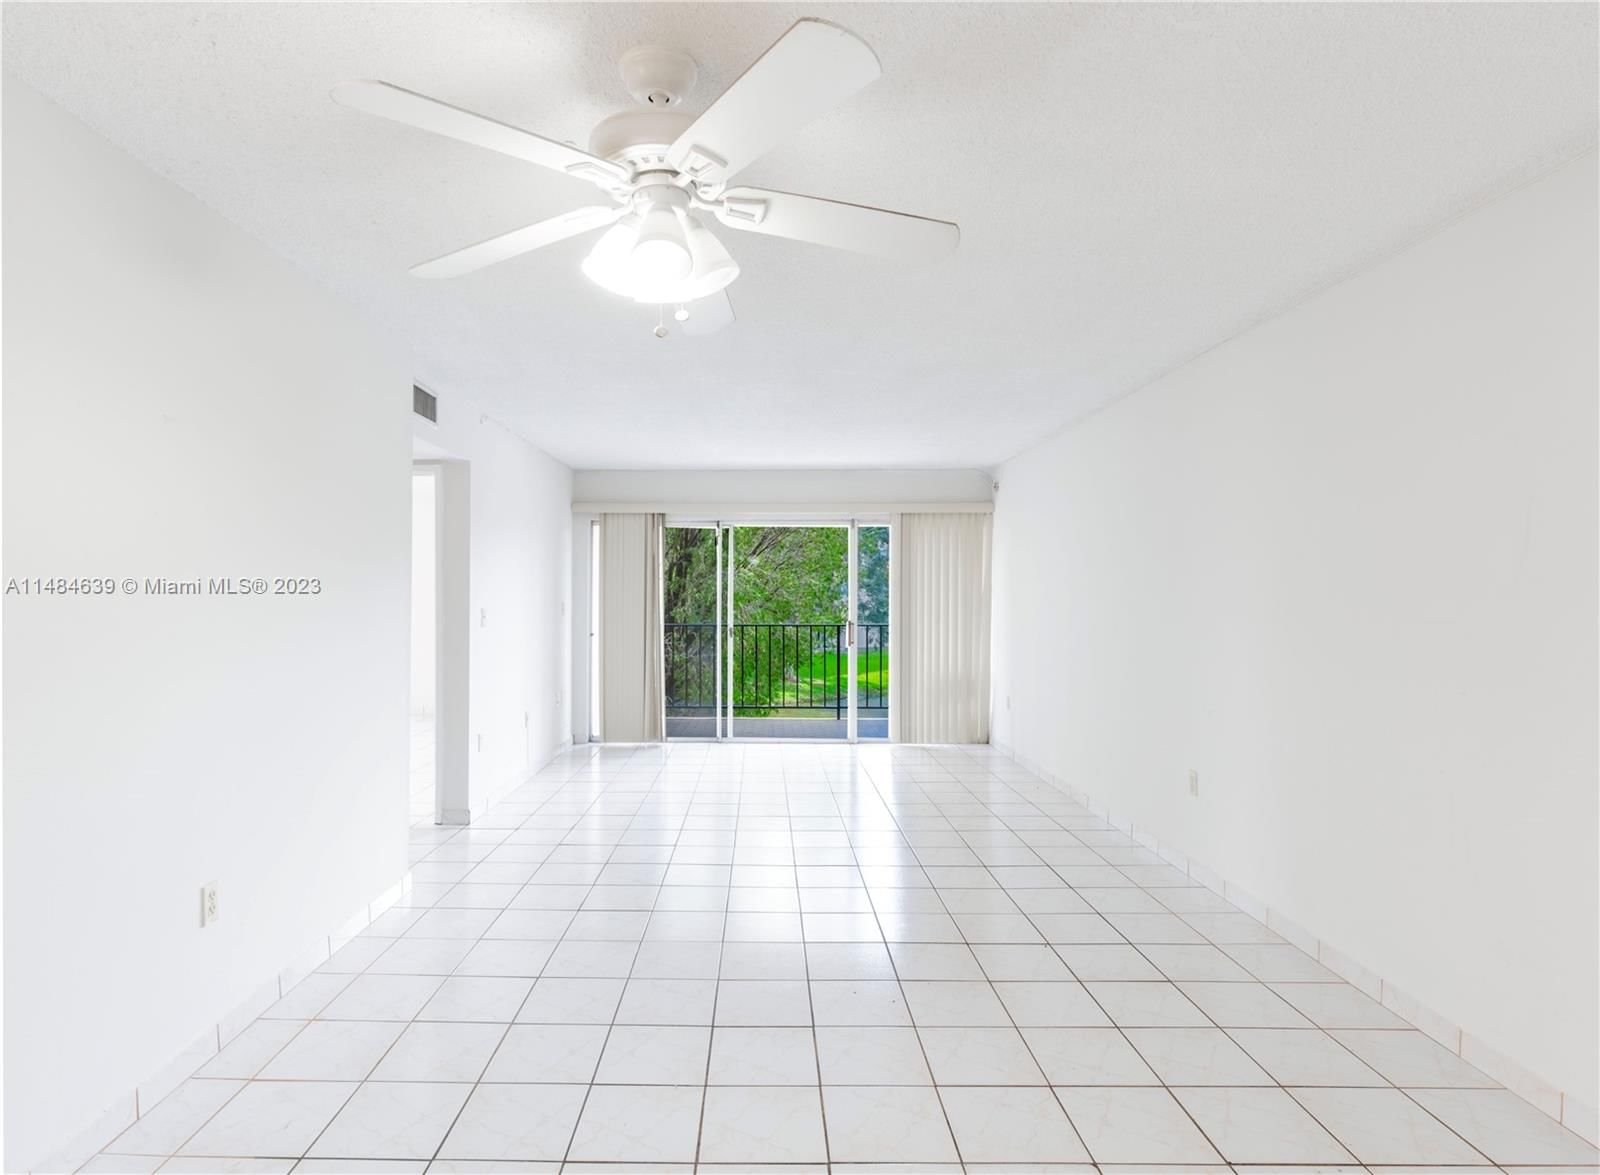 Real estate property located at 706 87th Ave #205, Miami-Dade County, Miami, FL